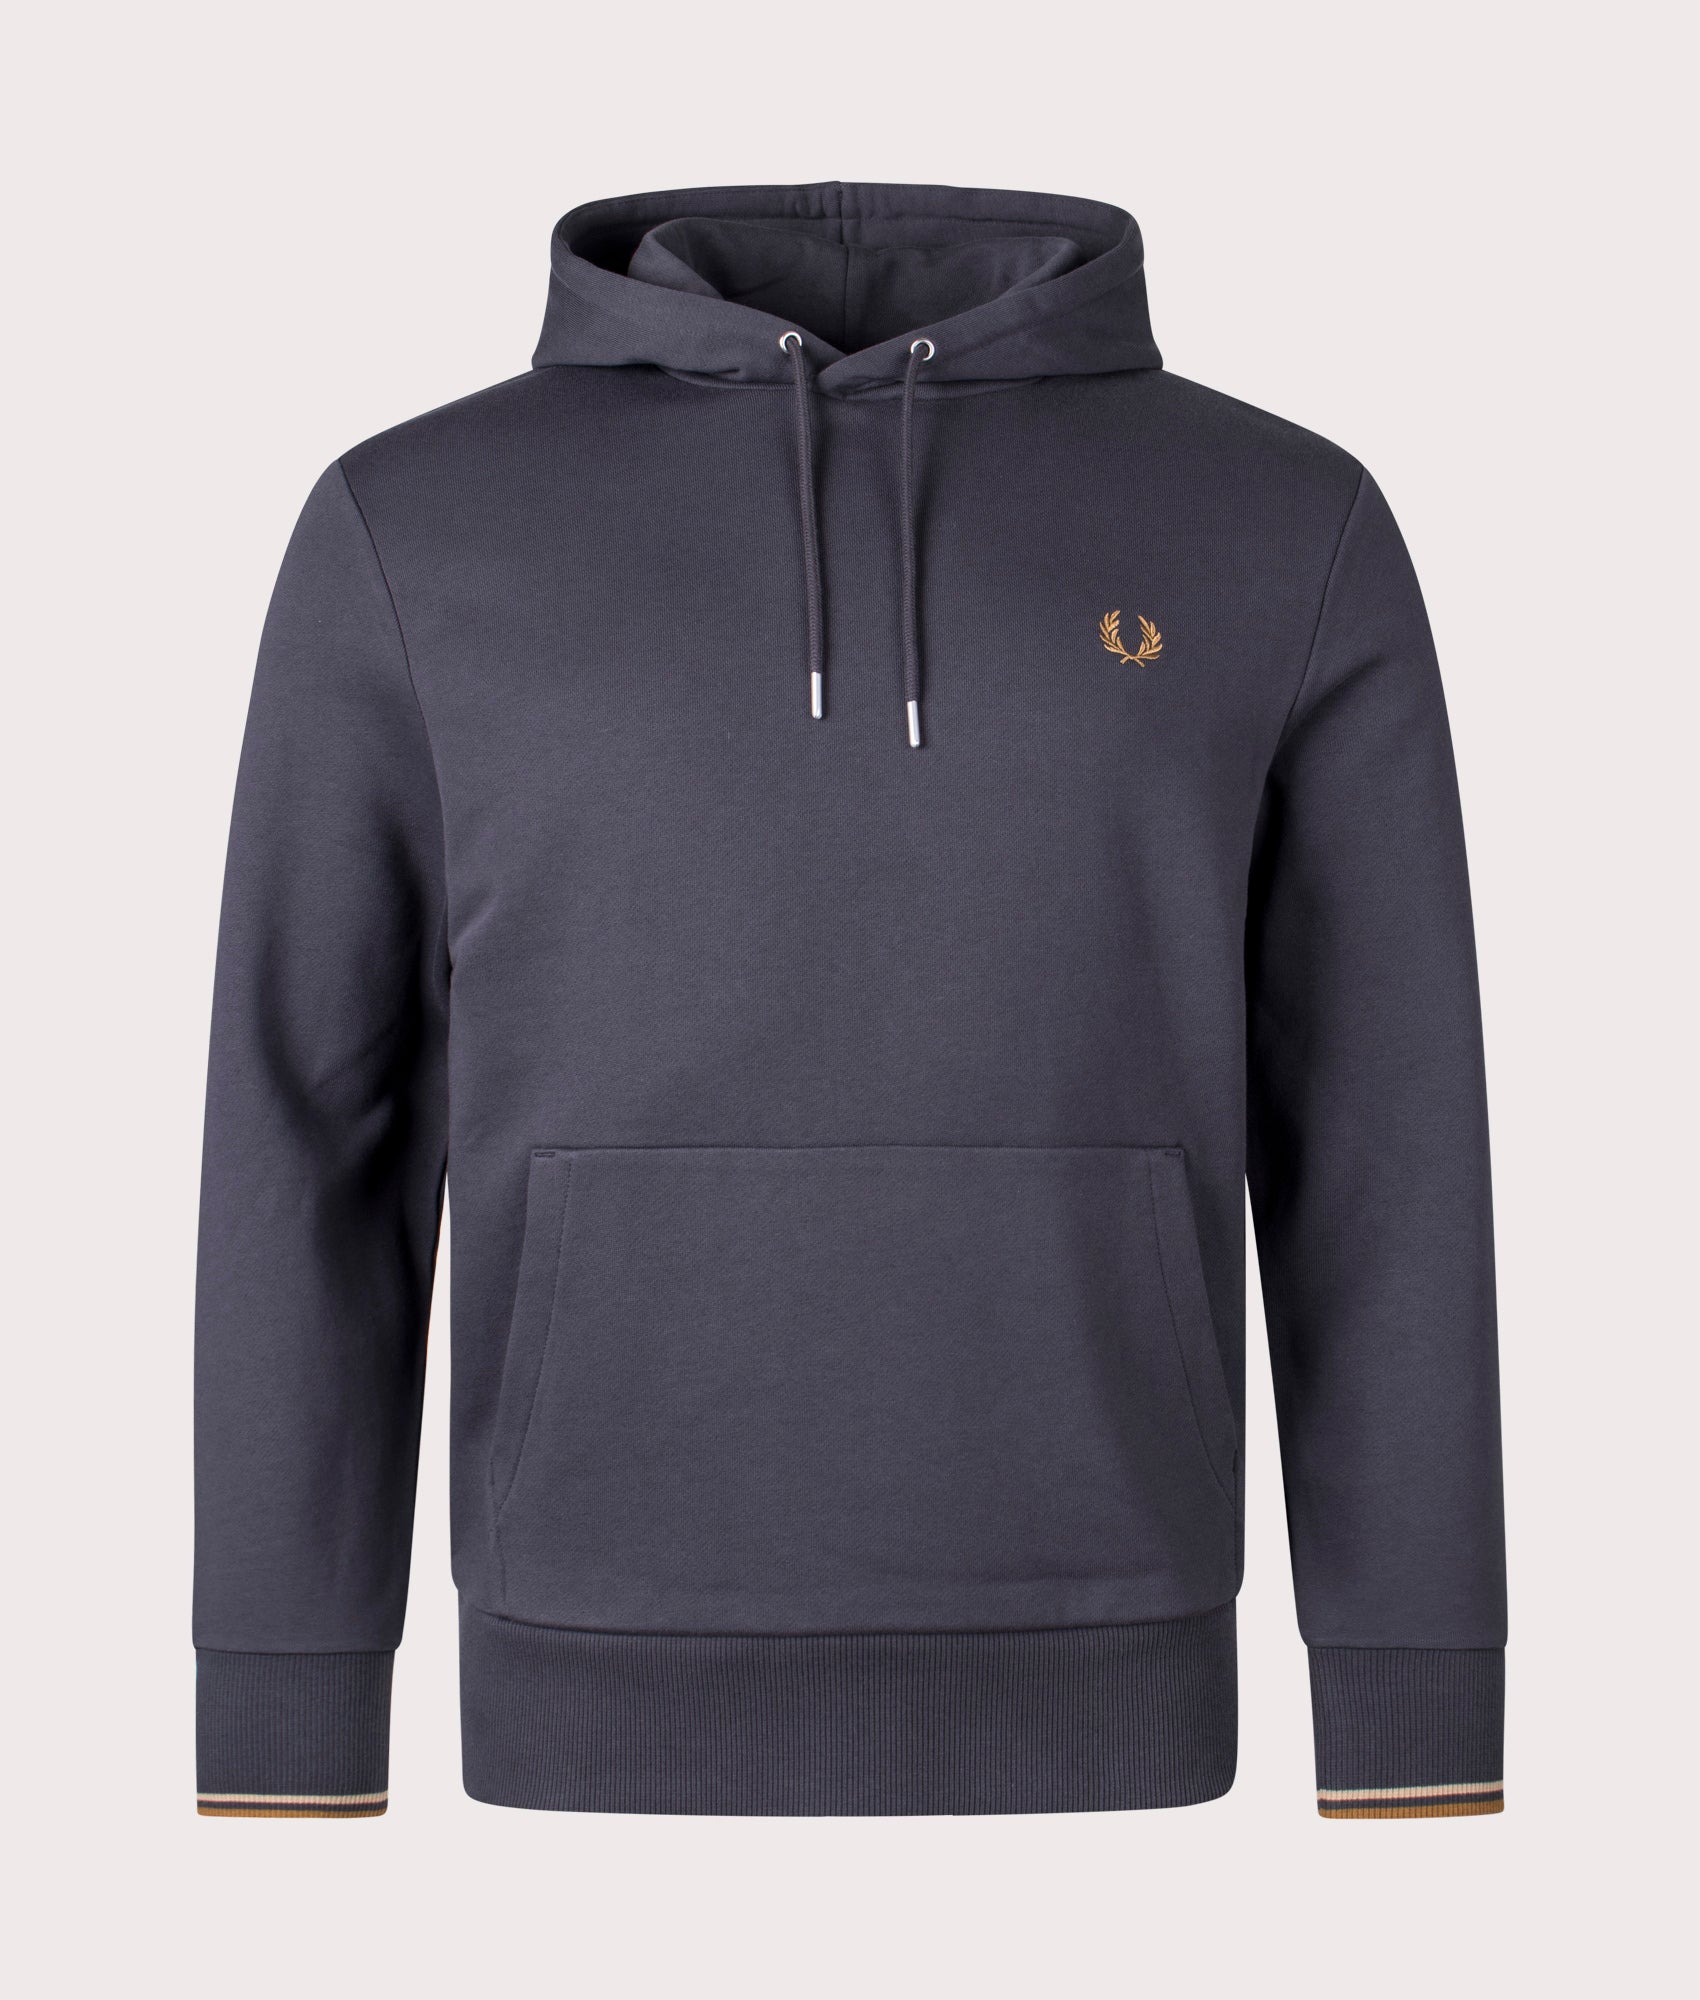 Fred Perry Mens Tipped Hooded Sweatshirt - Colour: V07 Anchor Grey/Dark Caramel - Size: Medium